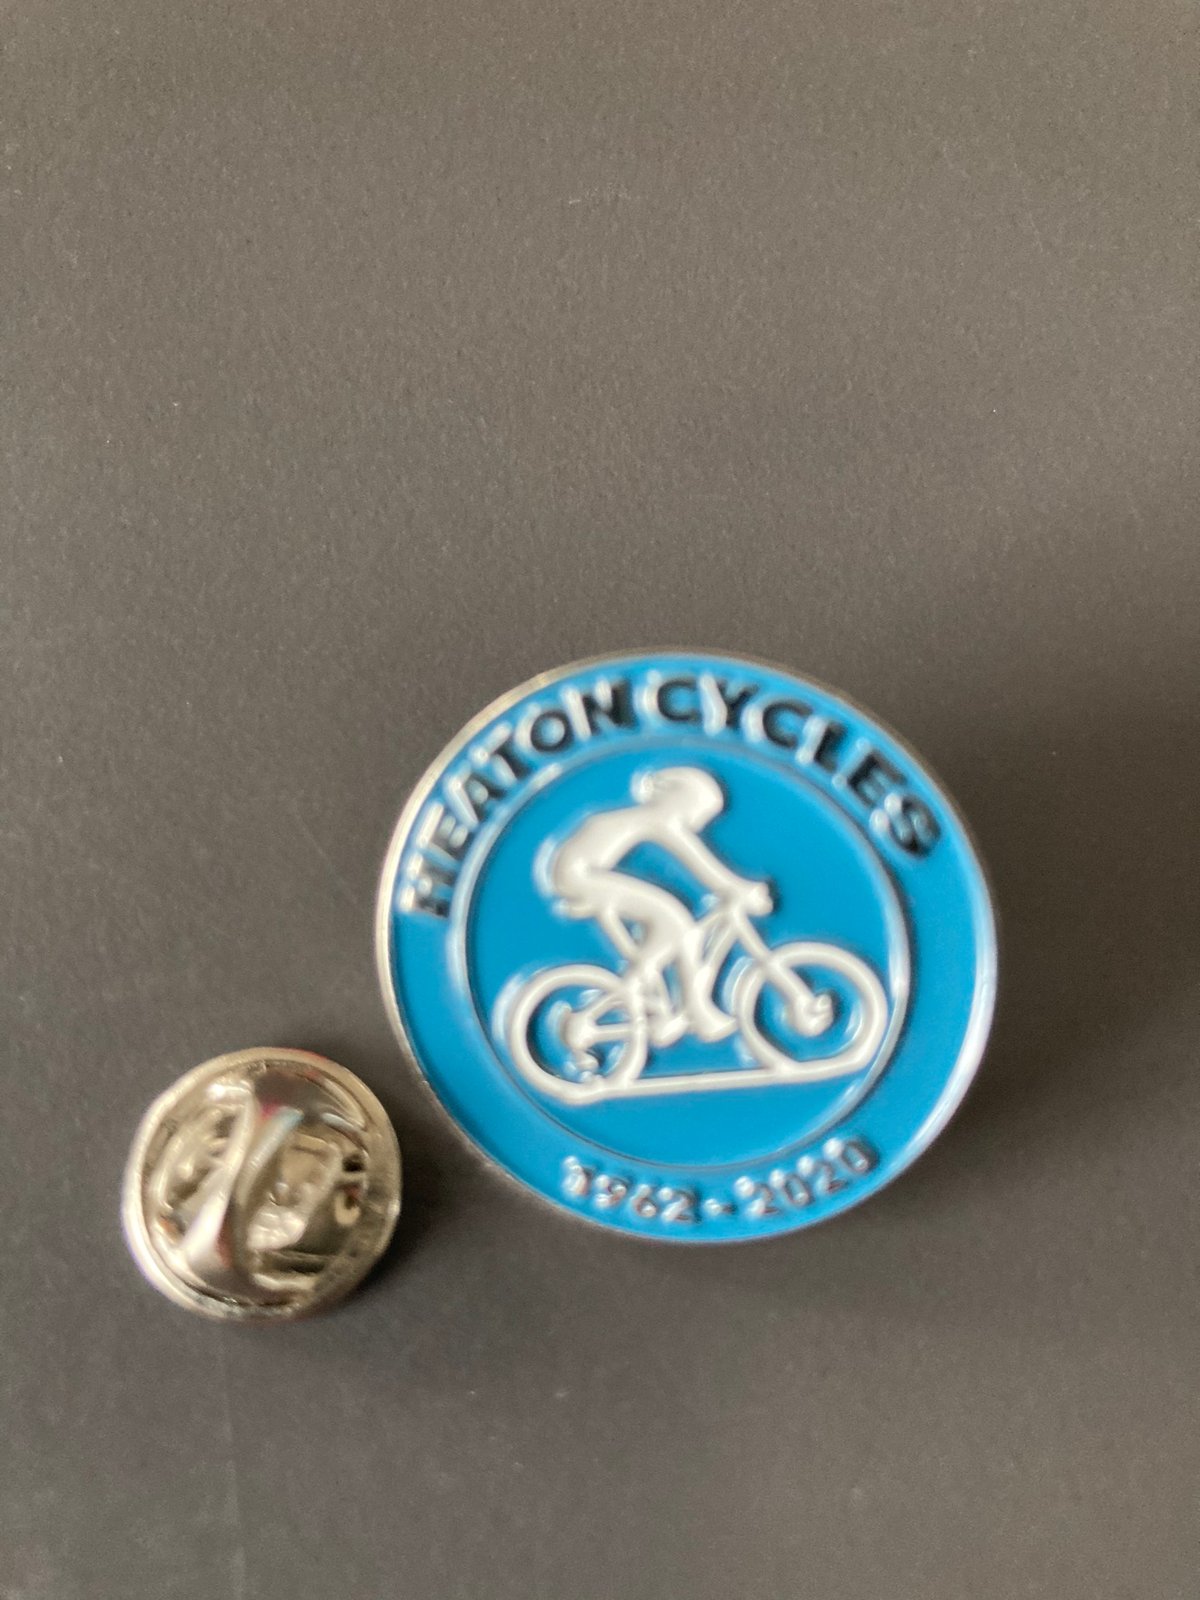 Image of Heaton Cycles enamel badge